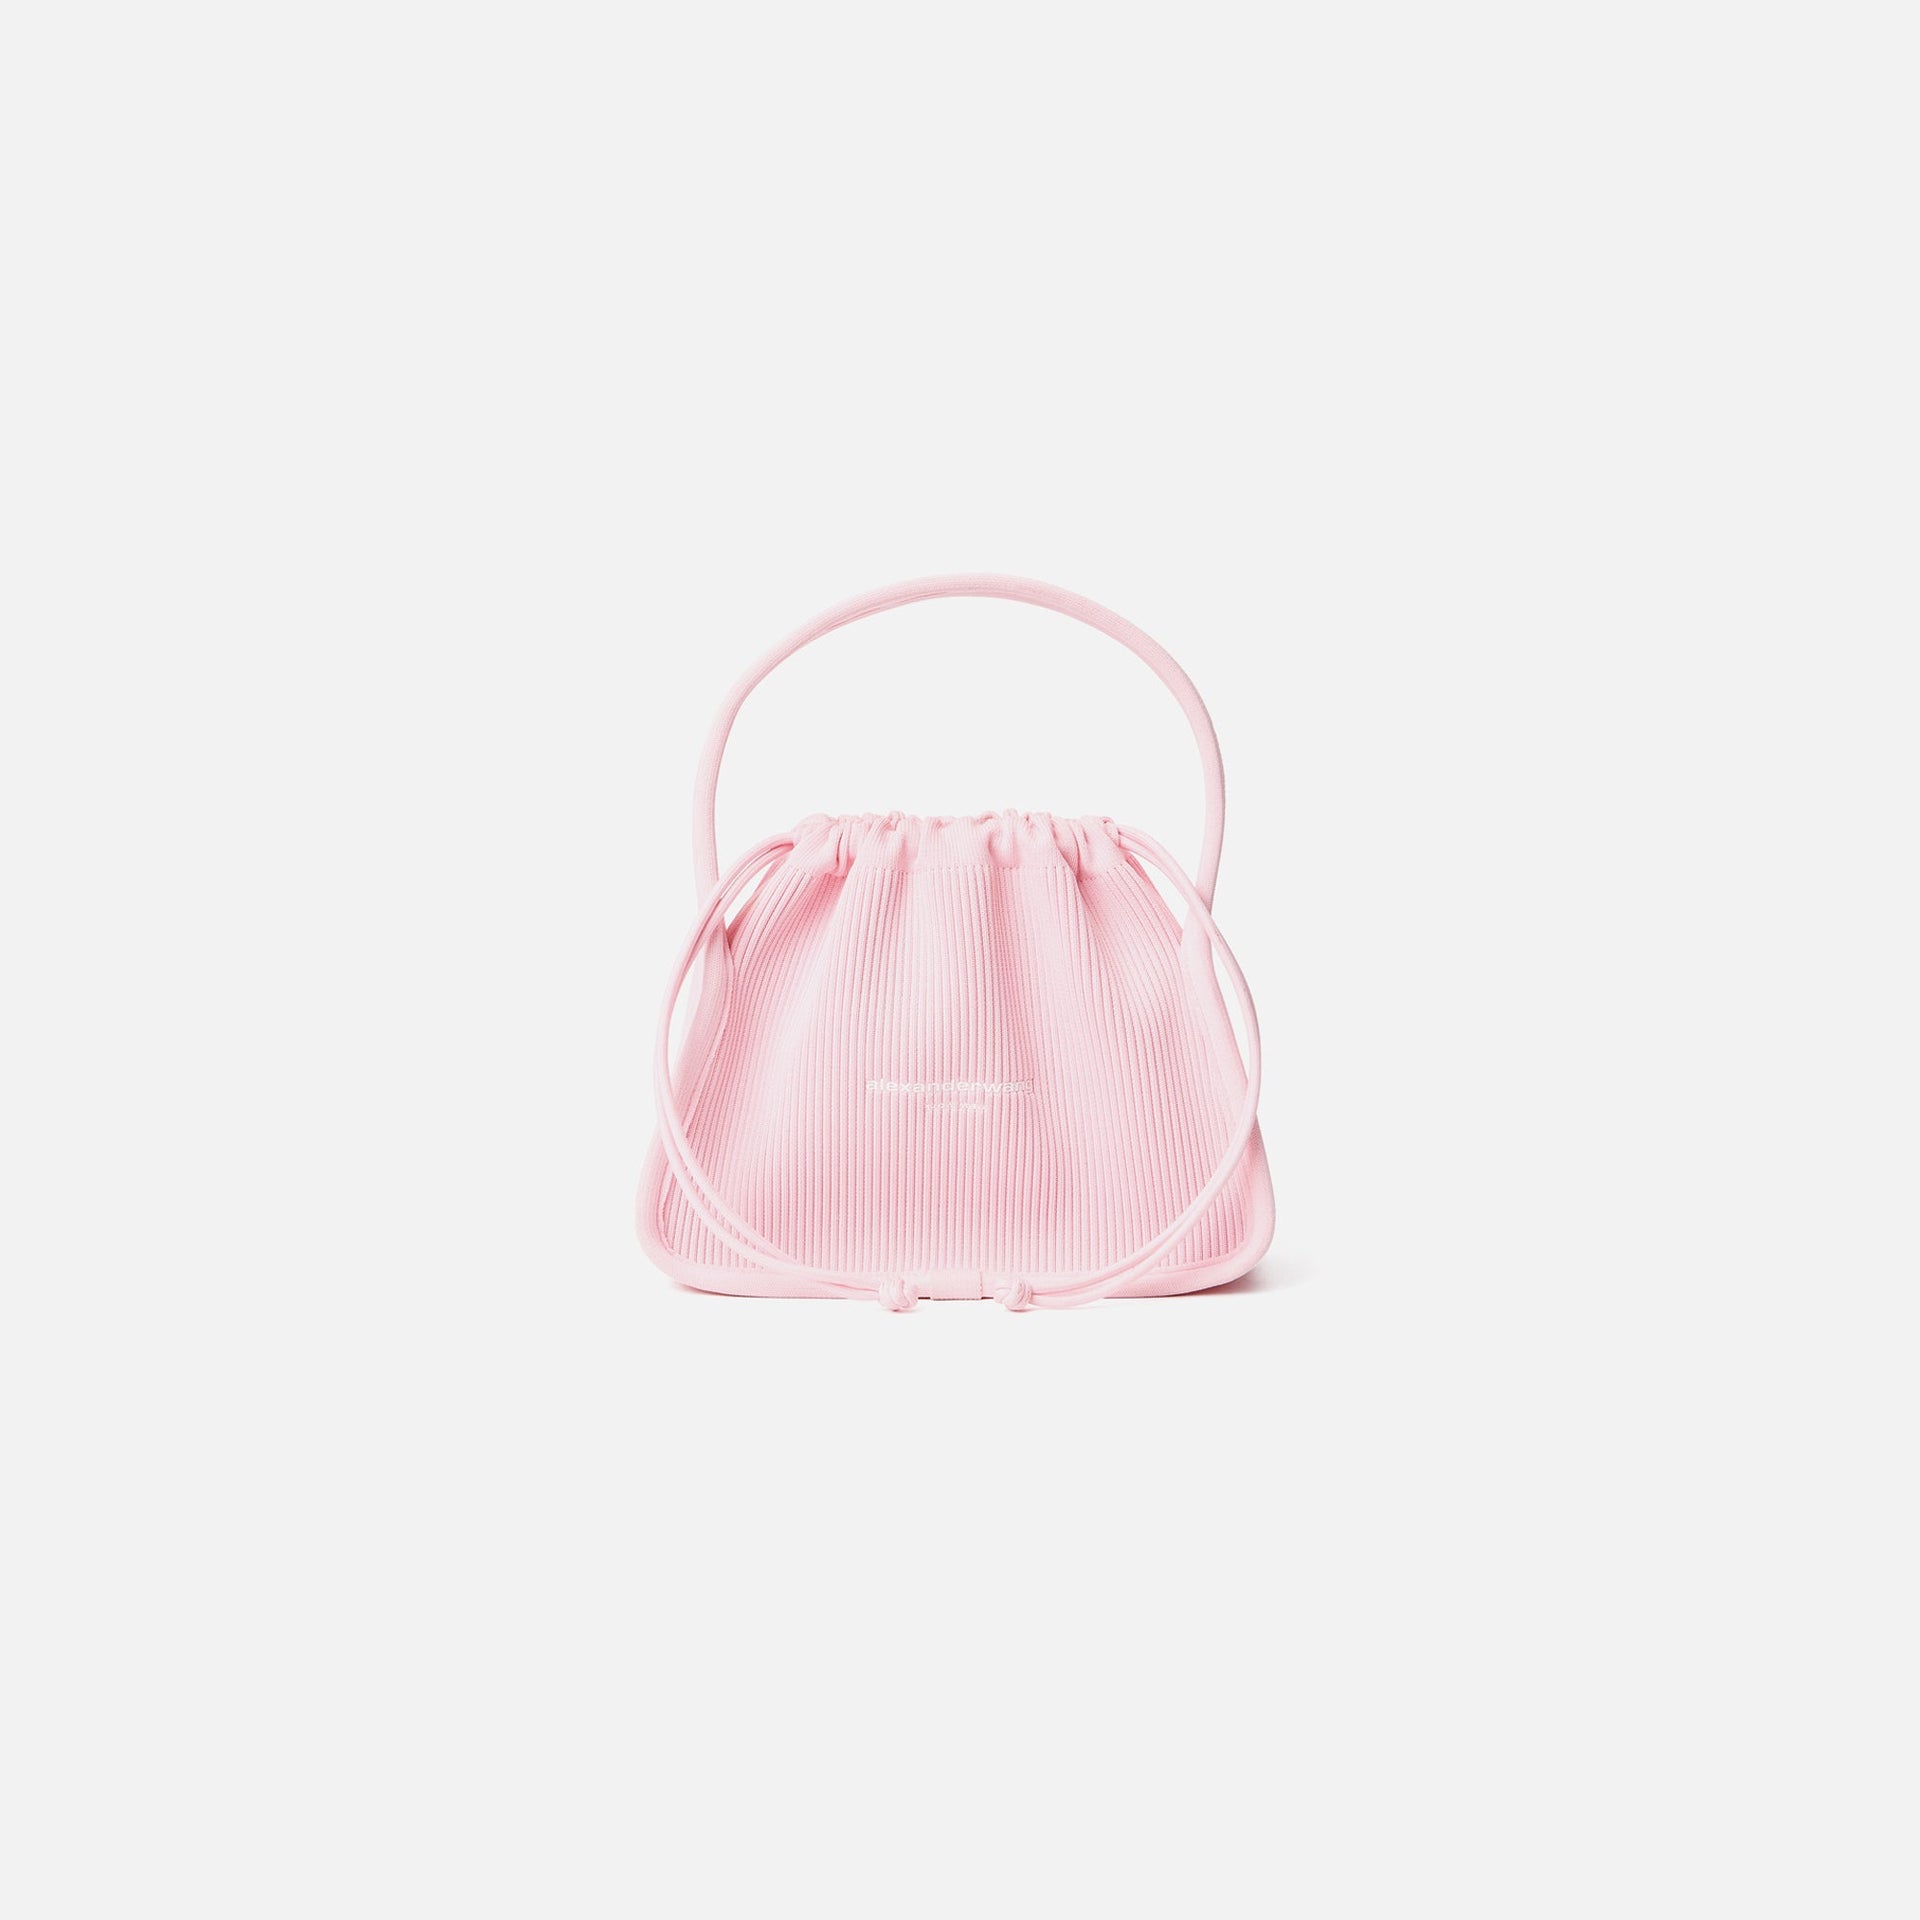 Alexander Wang Ryan Small Bag - Light Pink